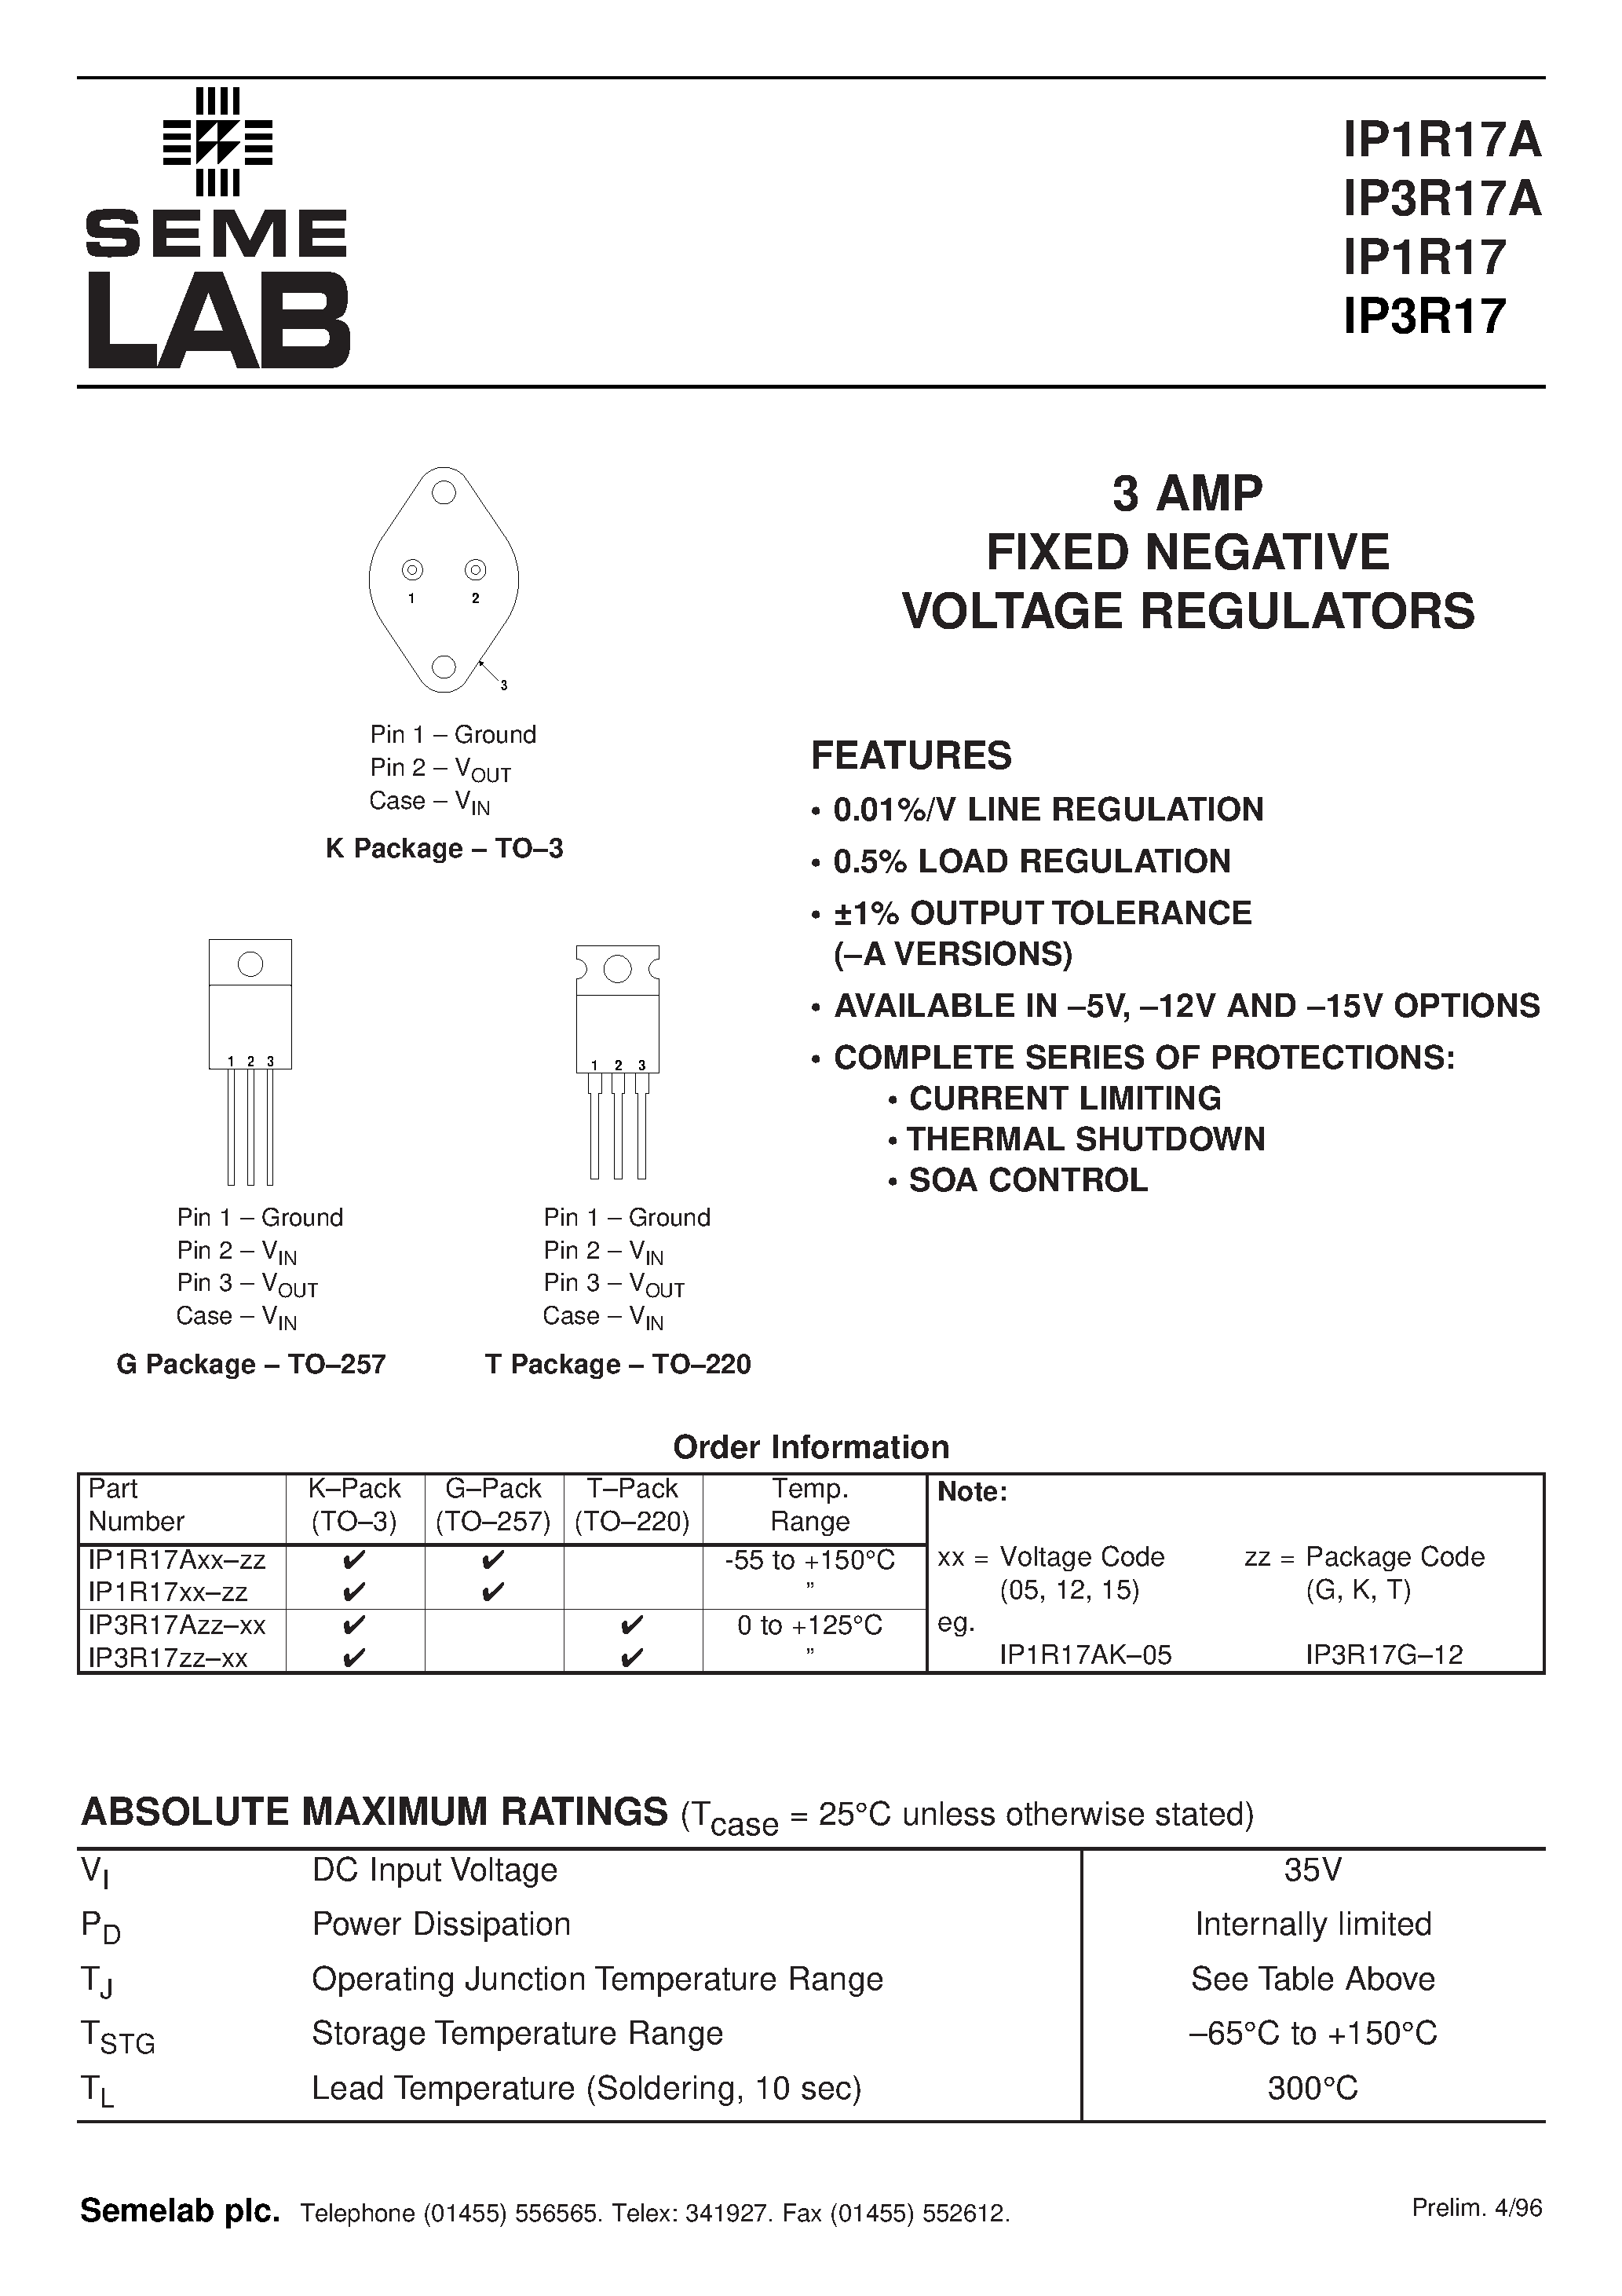 Datasheet IP1R1715-K - 3 AMP FIXED NEGATIVE VOLTAGE REGULATORS page 1